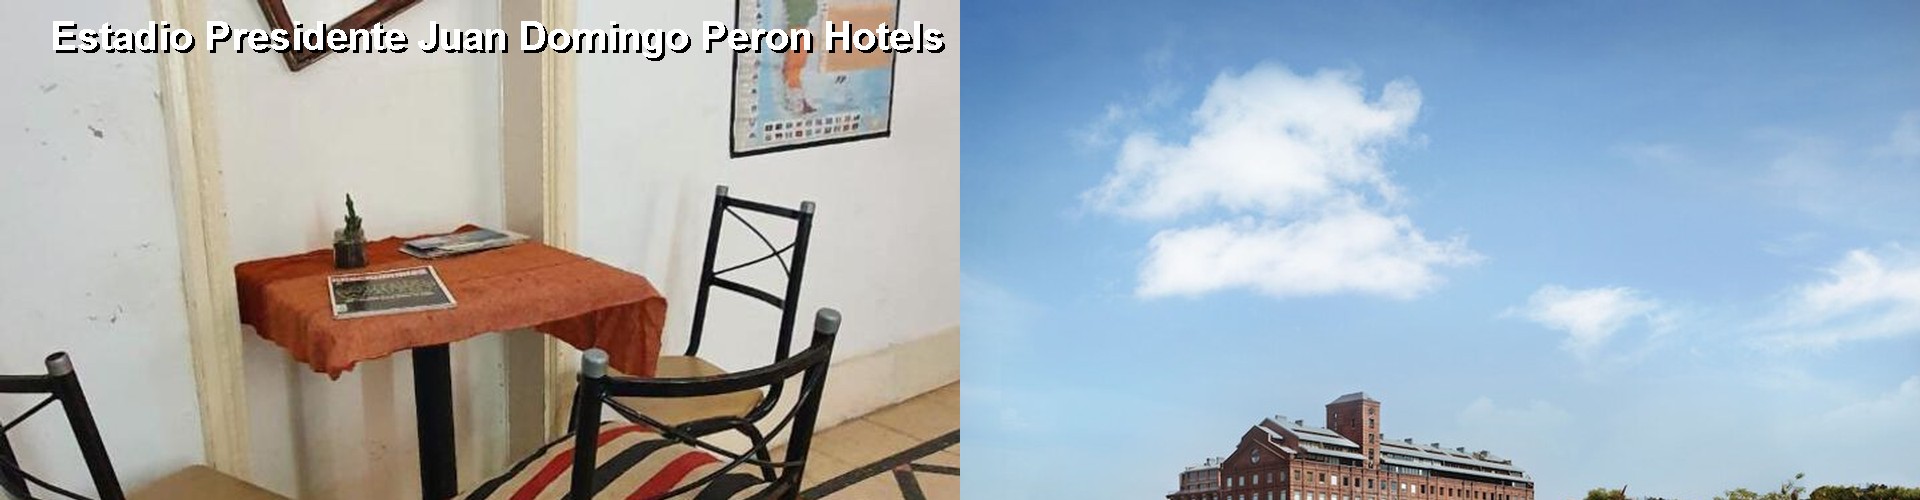 5 Best Hotels near Estadio Presidente Juan Domingo Peron